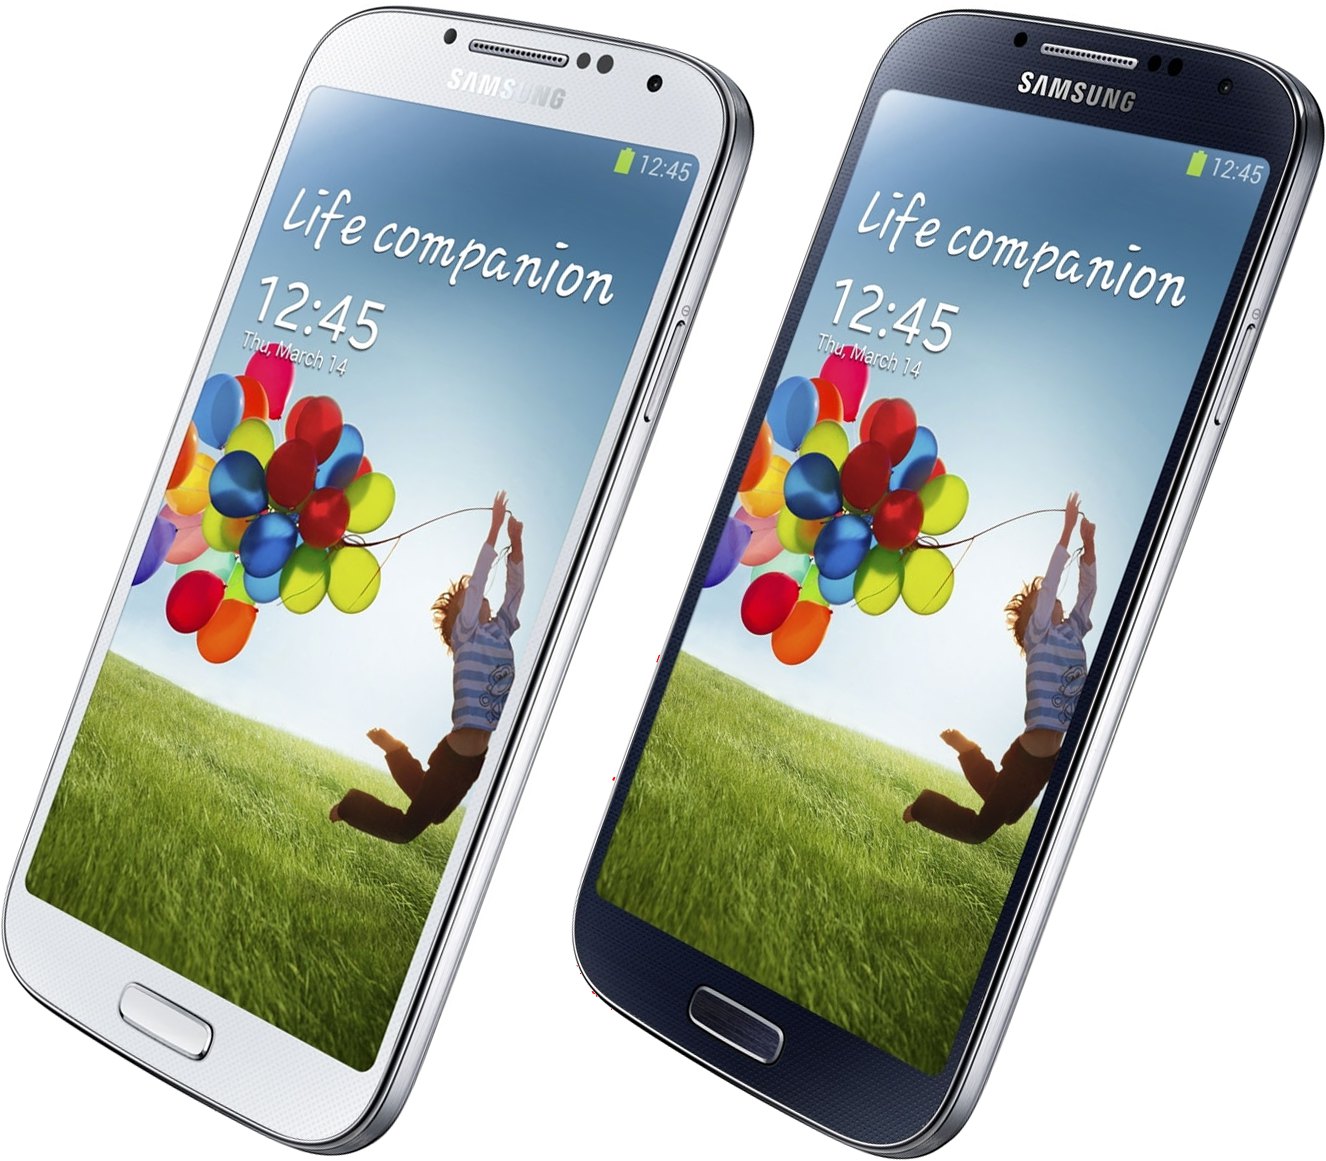 Samsung Galaxy s4 LTE-A